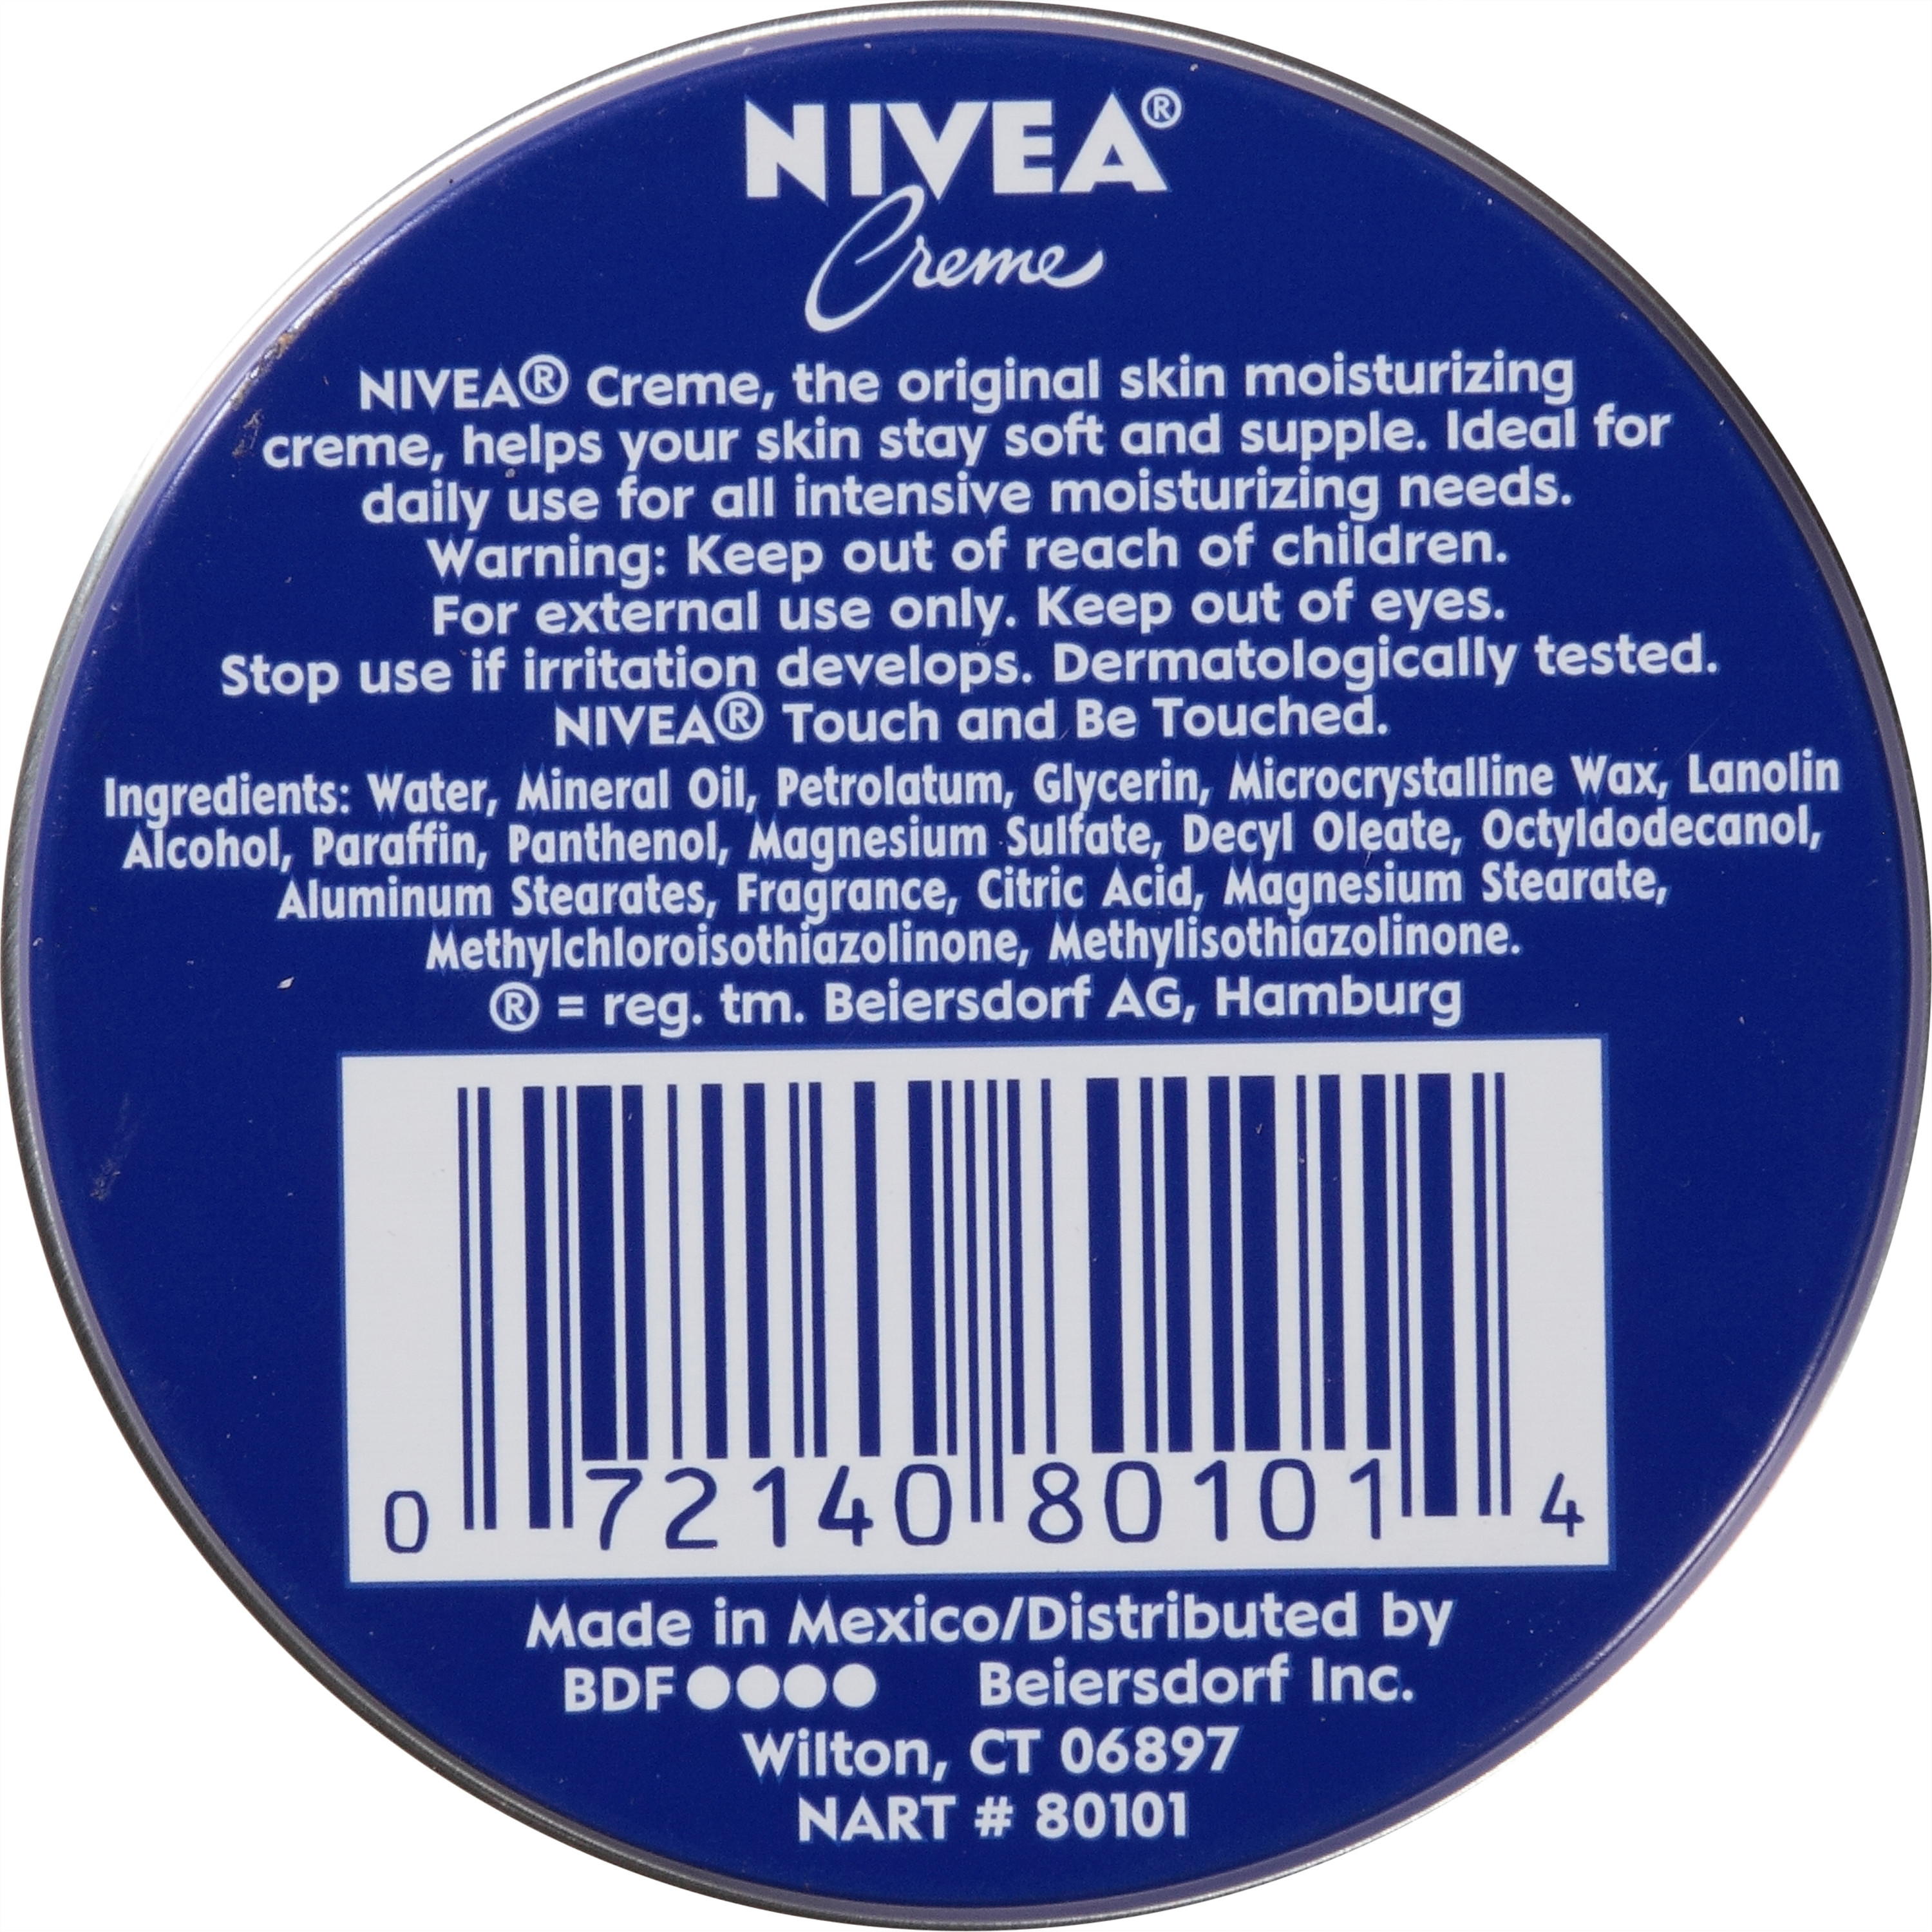 NIVEA Creme Body, Face and Hand Moisturizing Cream, 1 Oz Tin - image 13 of 13